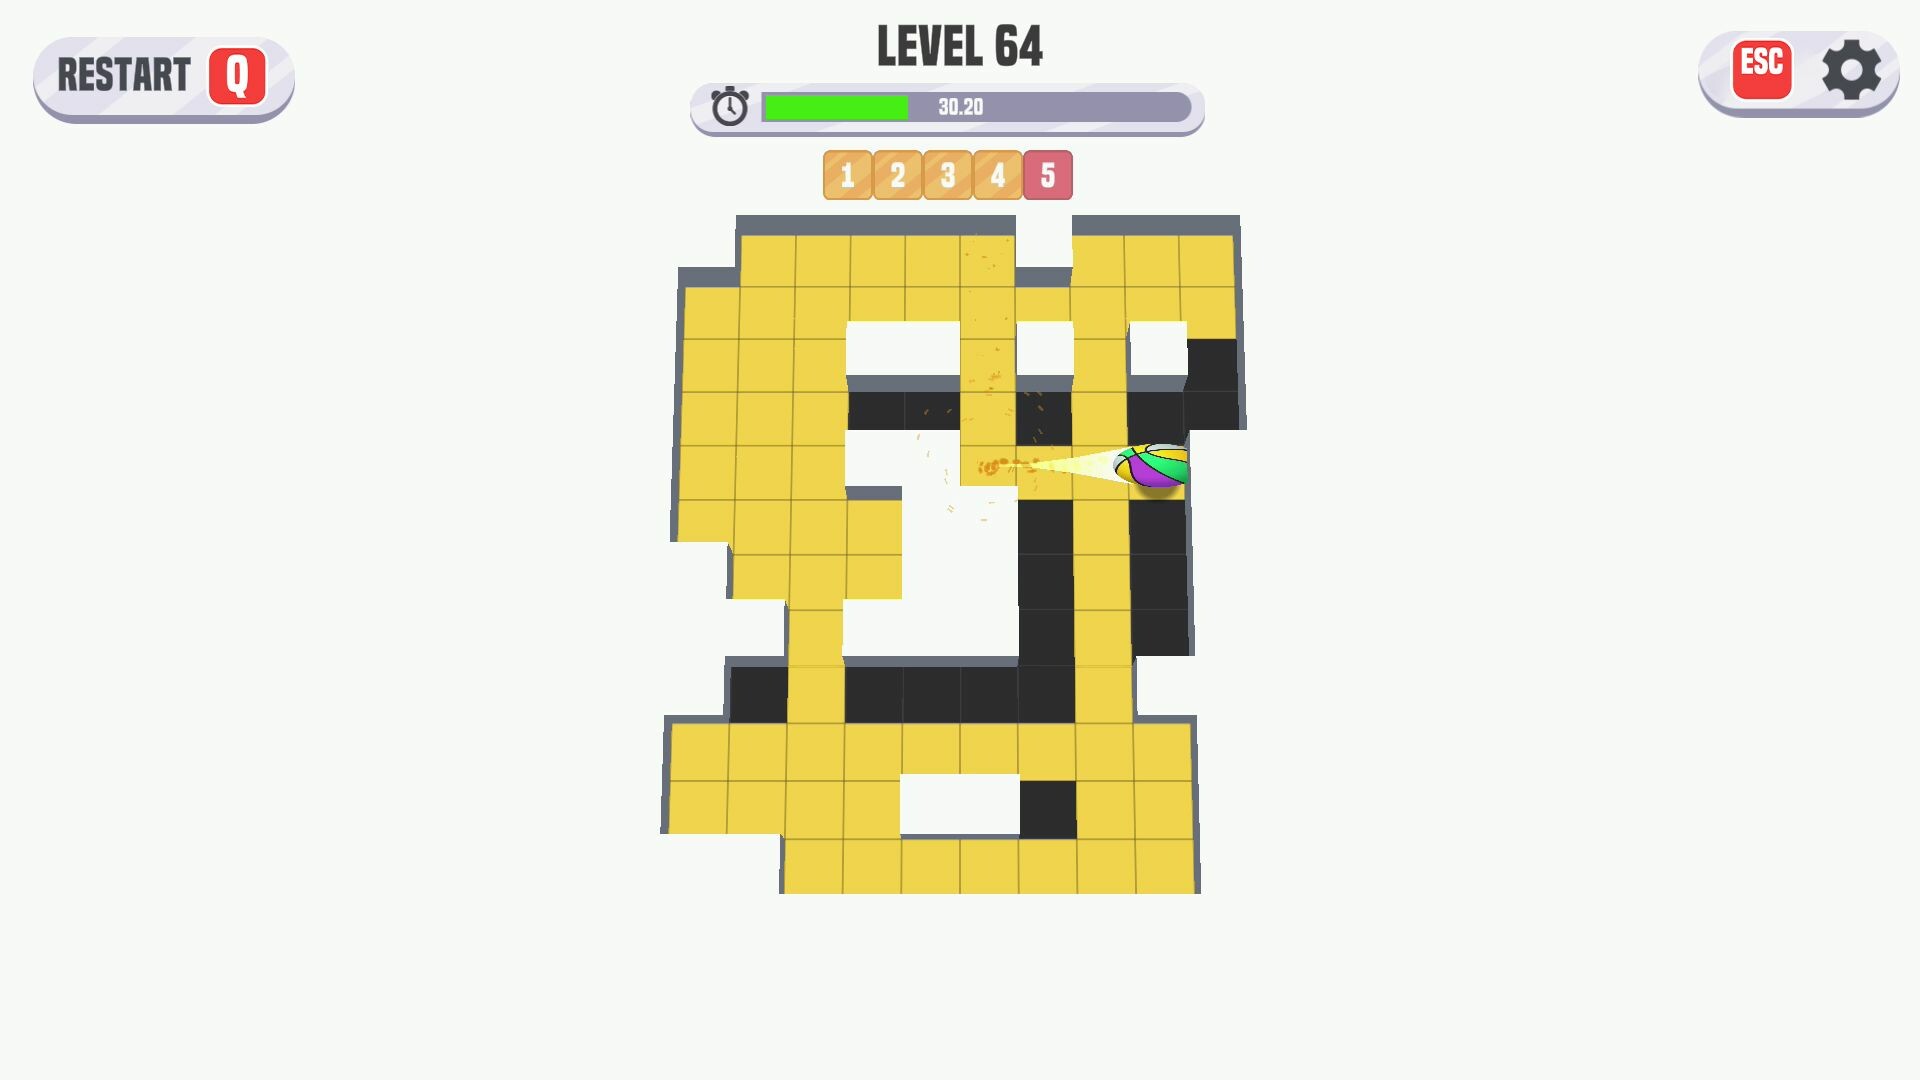 AMAZE! Level Pack 2 Featured Screenshot #1